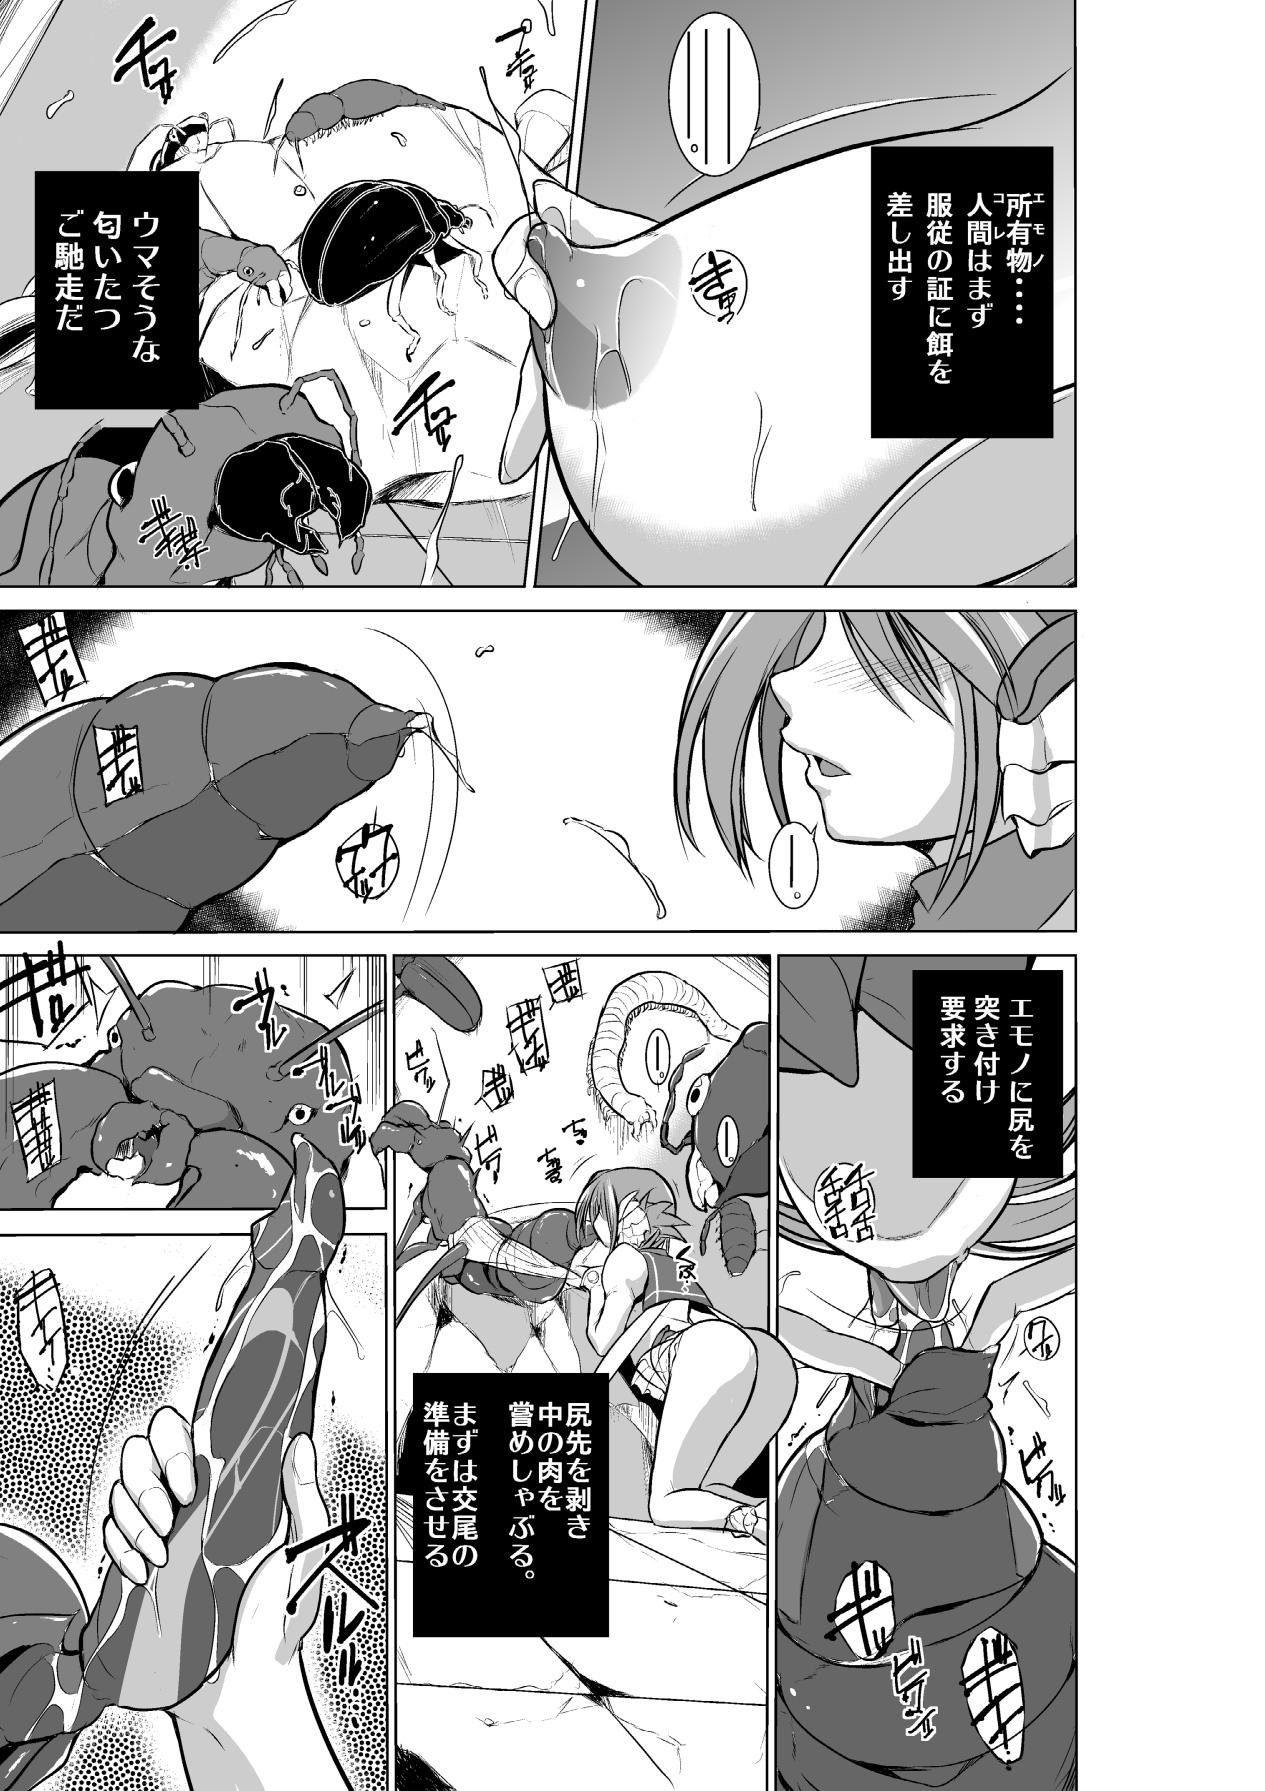 Puto Dungeon Travelers - Manaka no Himegoto 2 - Toheart2 Jock - Page 5